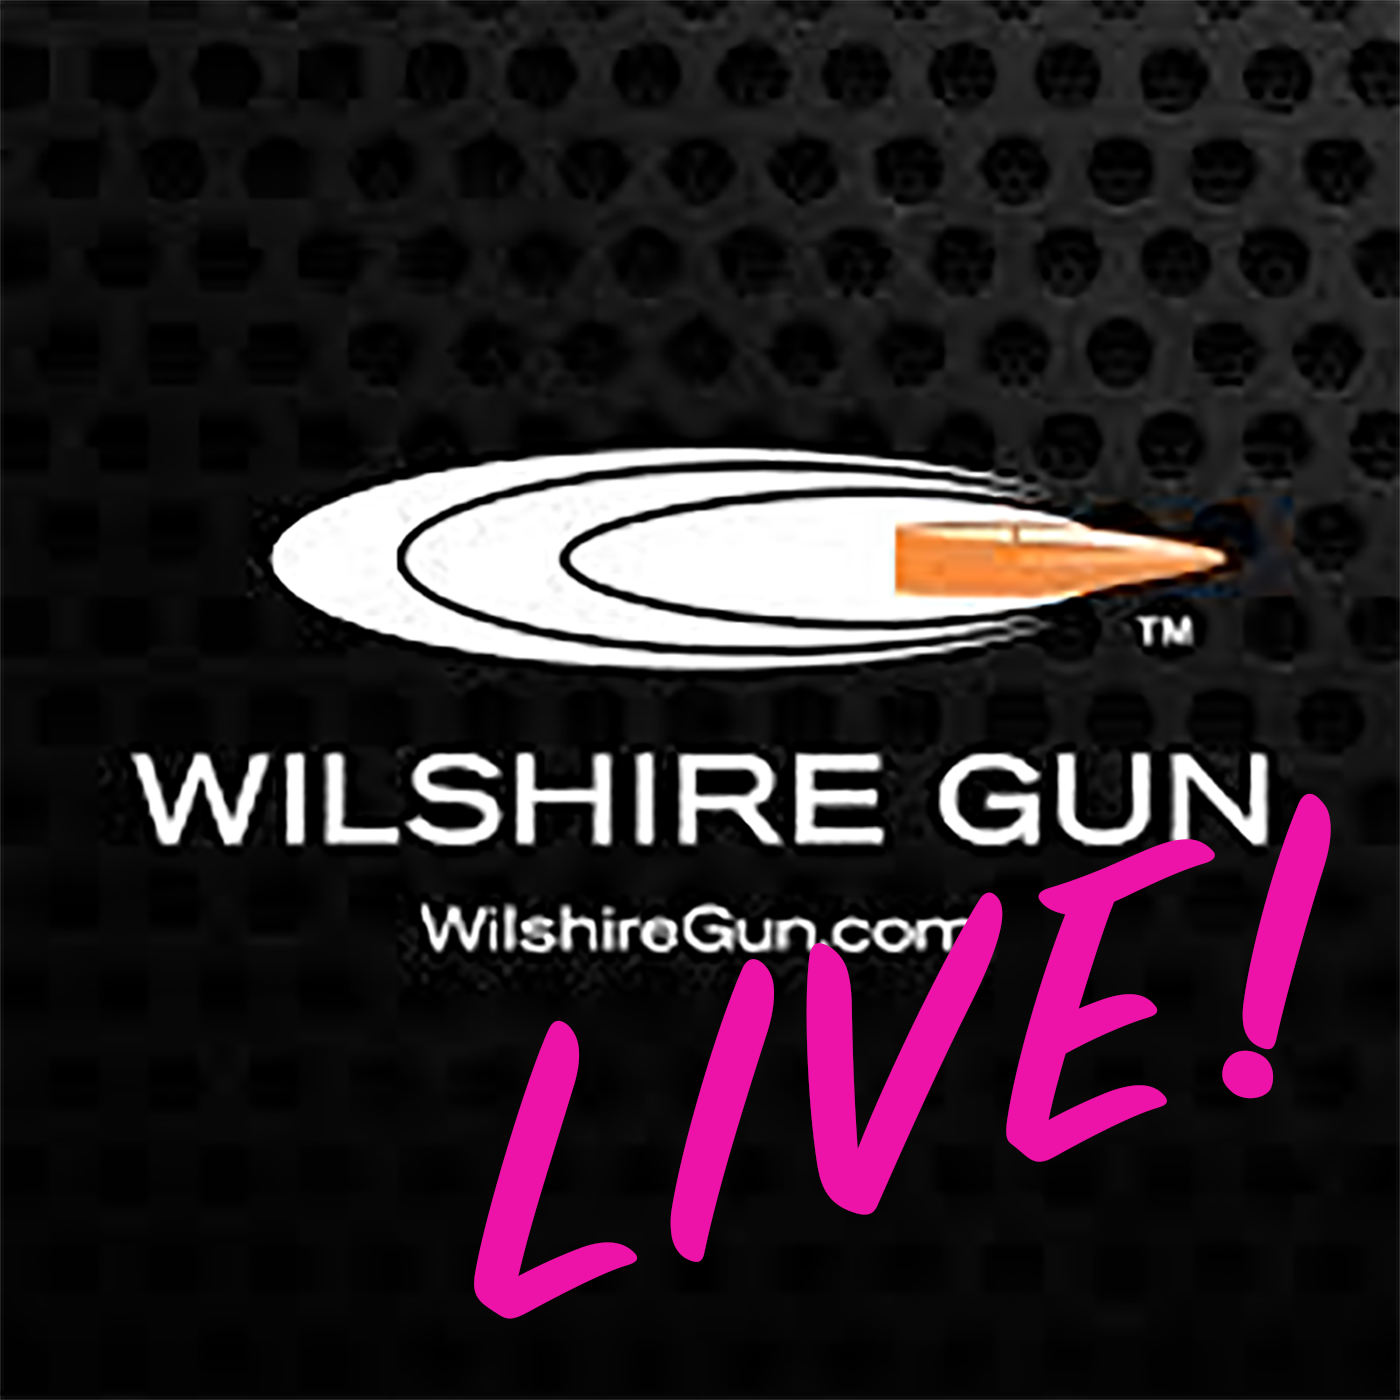 LIVE! From Wilshire Gun